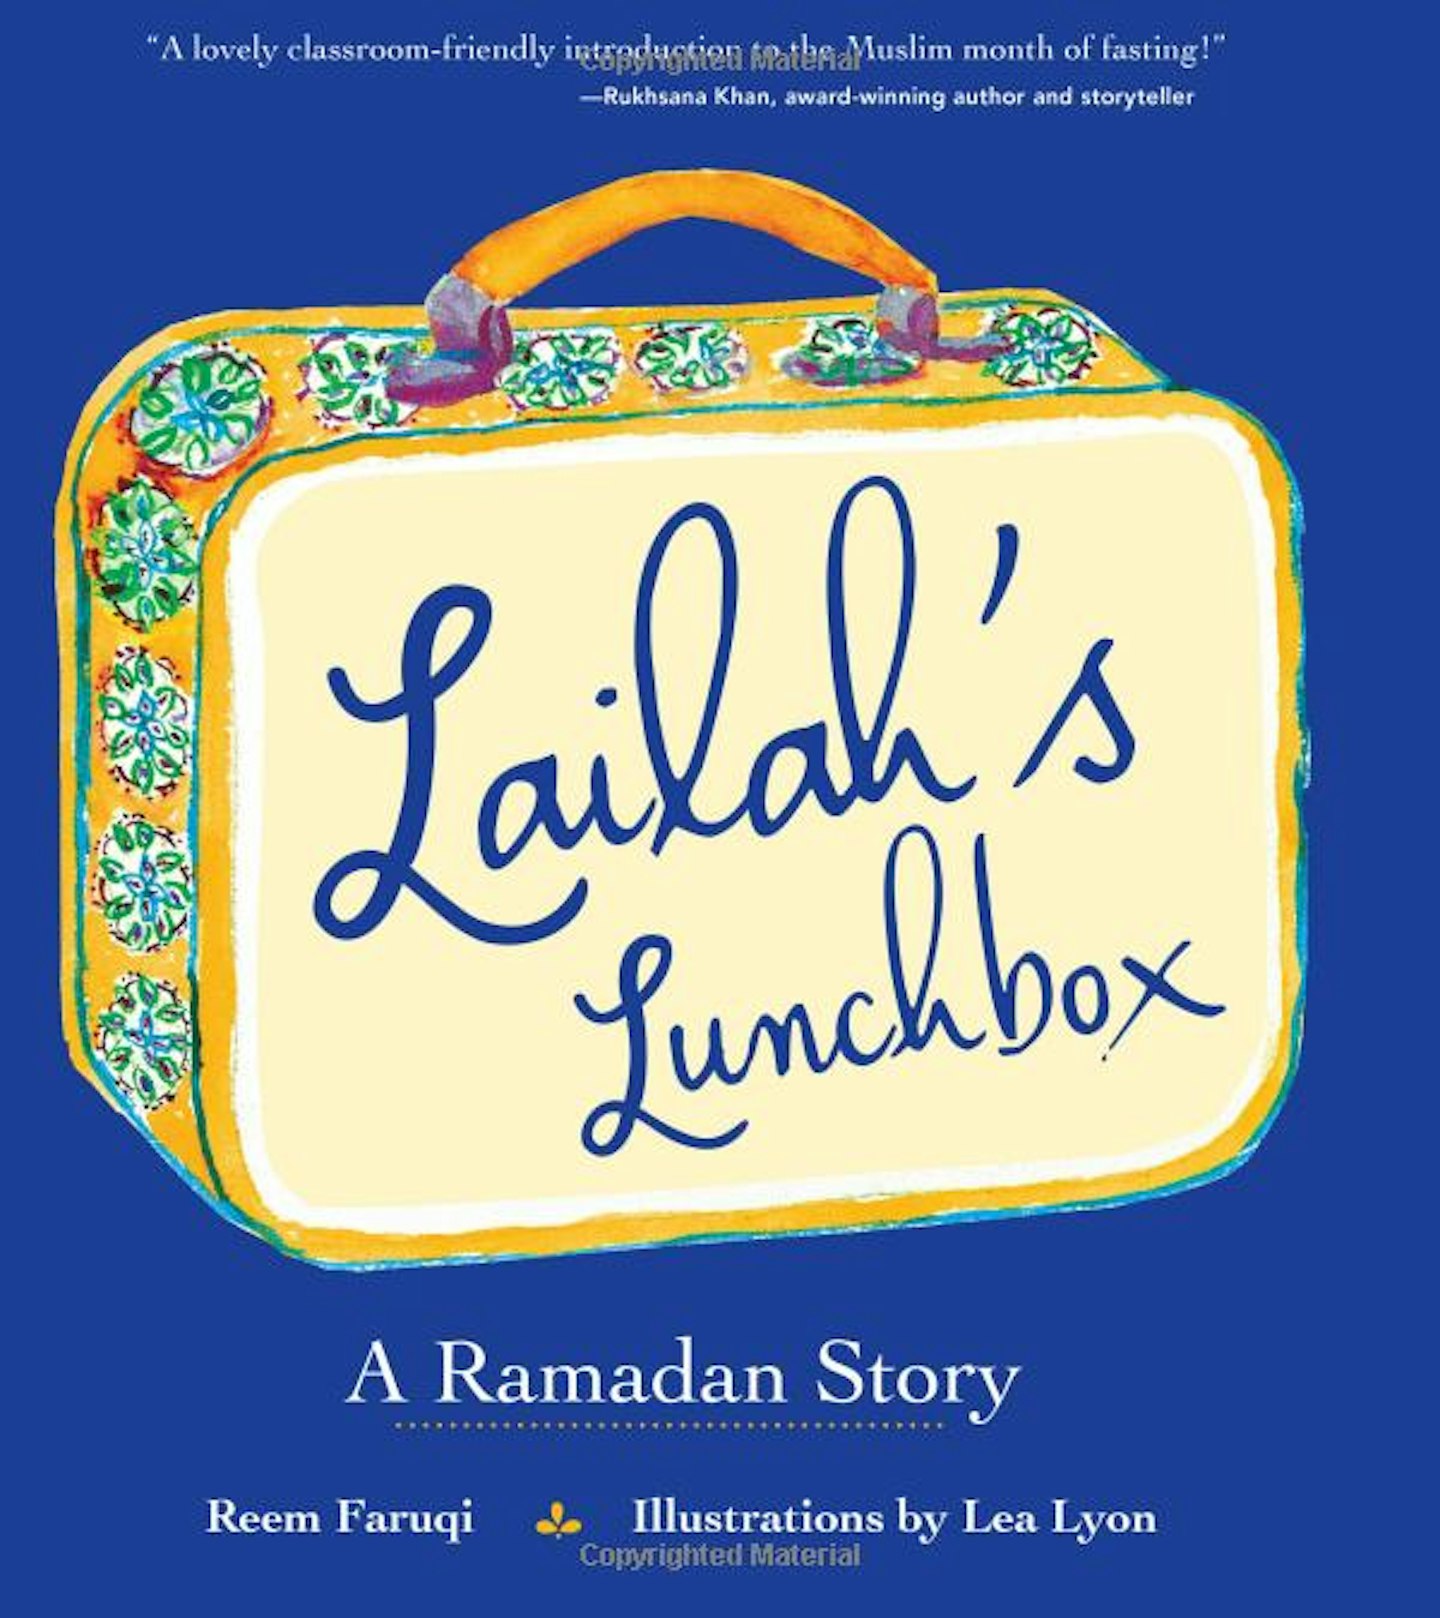 Lailah’s Lunchbox by Reem Faruqi